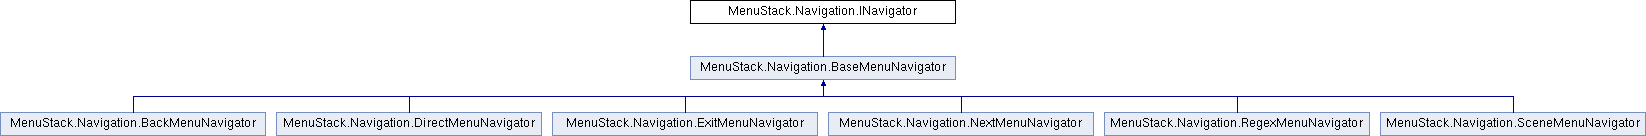 interface_menu_stack_1_1_navigation_1_1_i_navigator.png